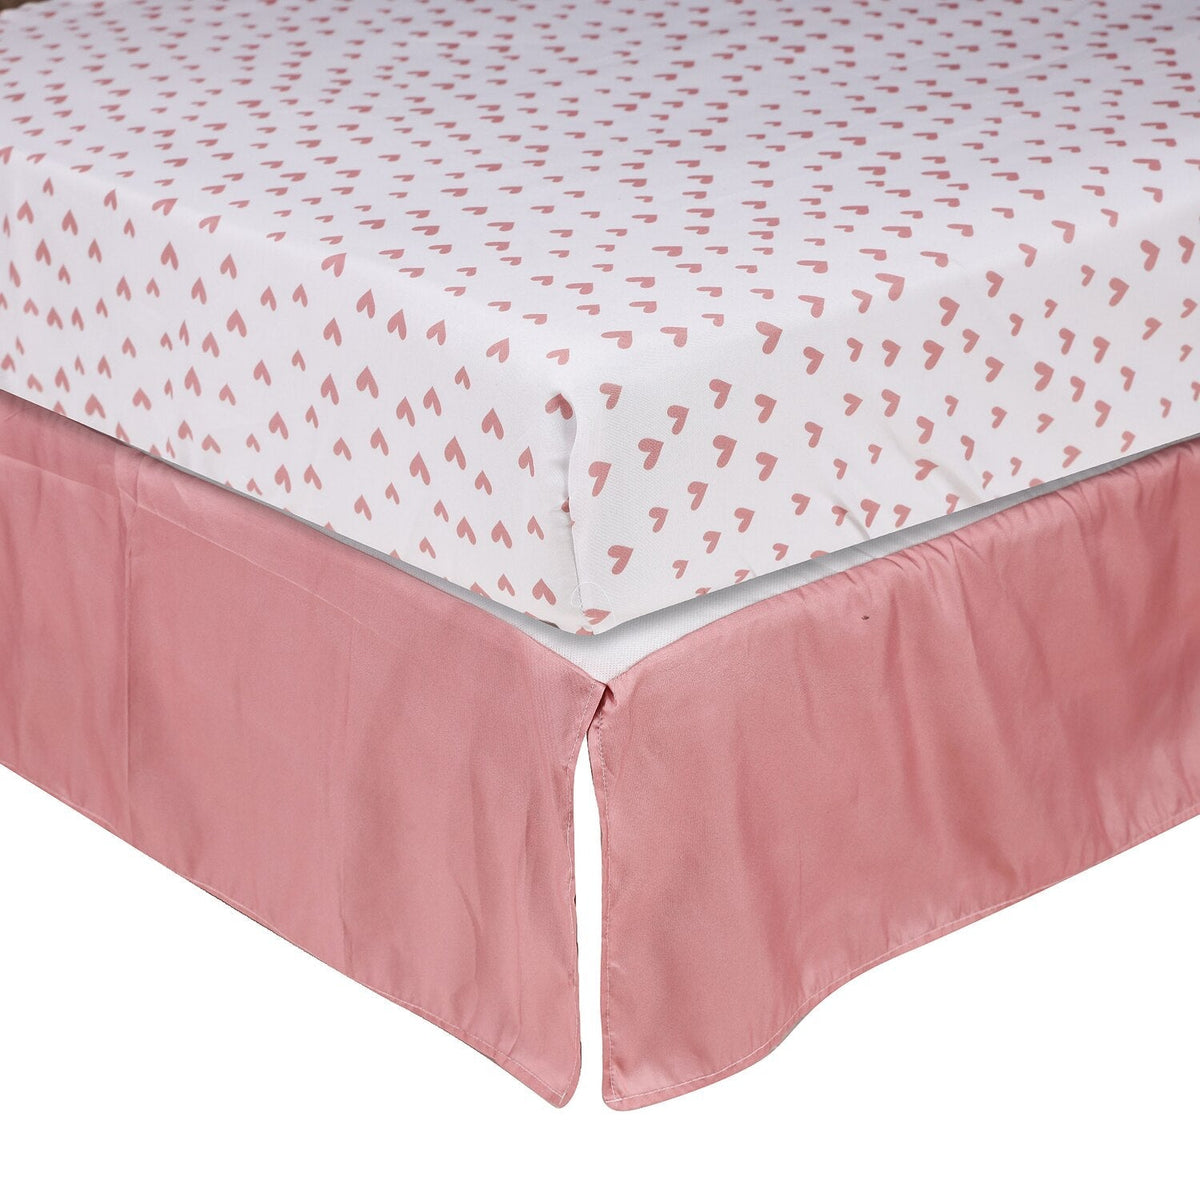 Swan Crib Bedding Set - Girls Baby Cot Accessories-ChandeliersDecor